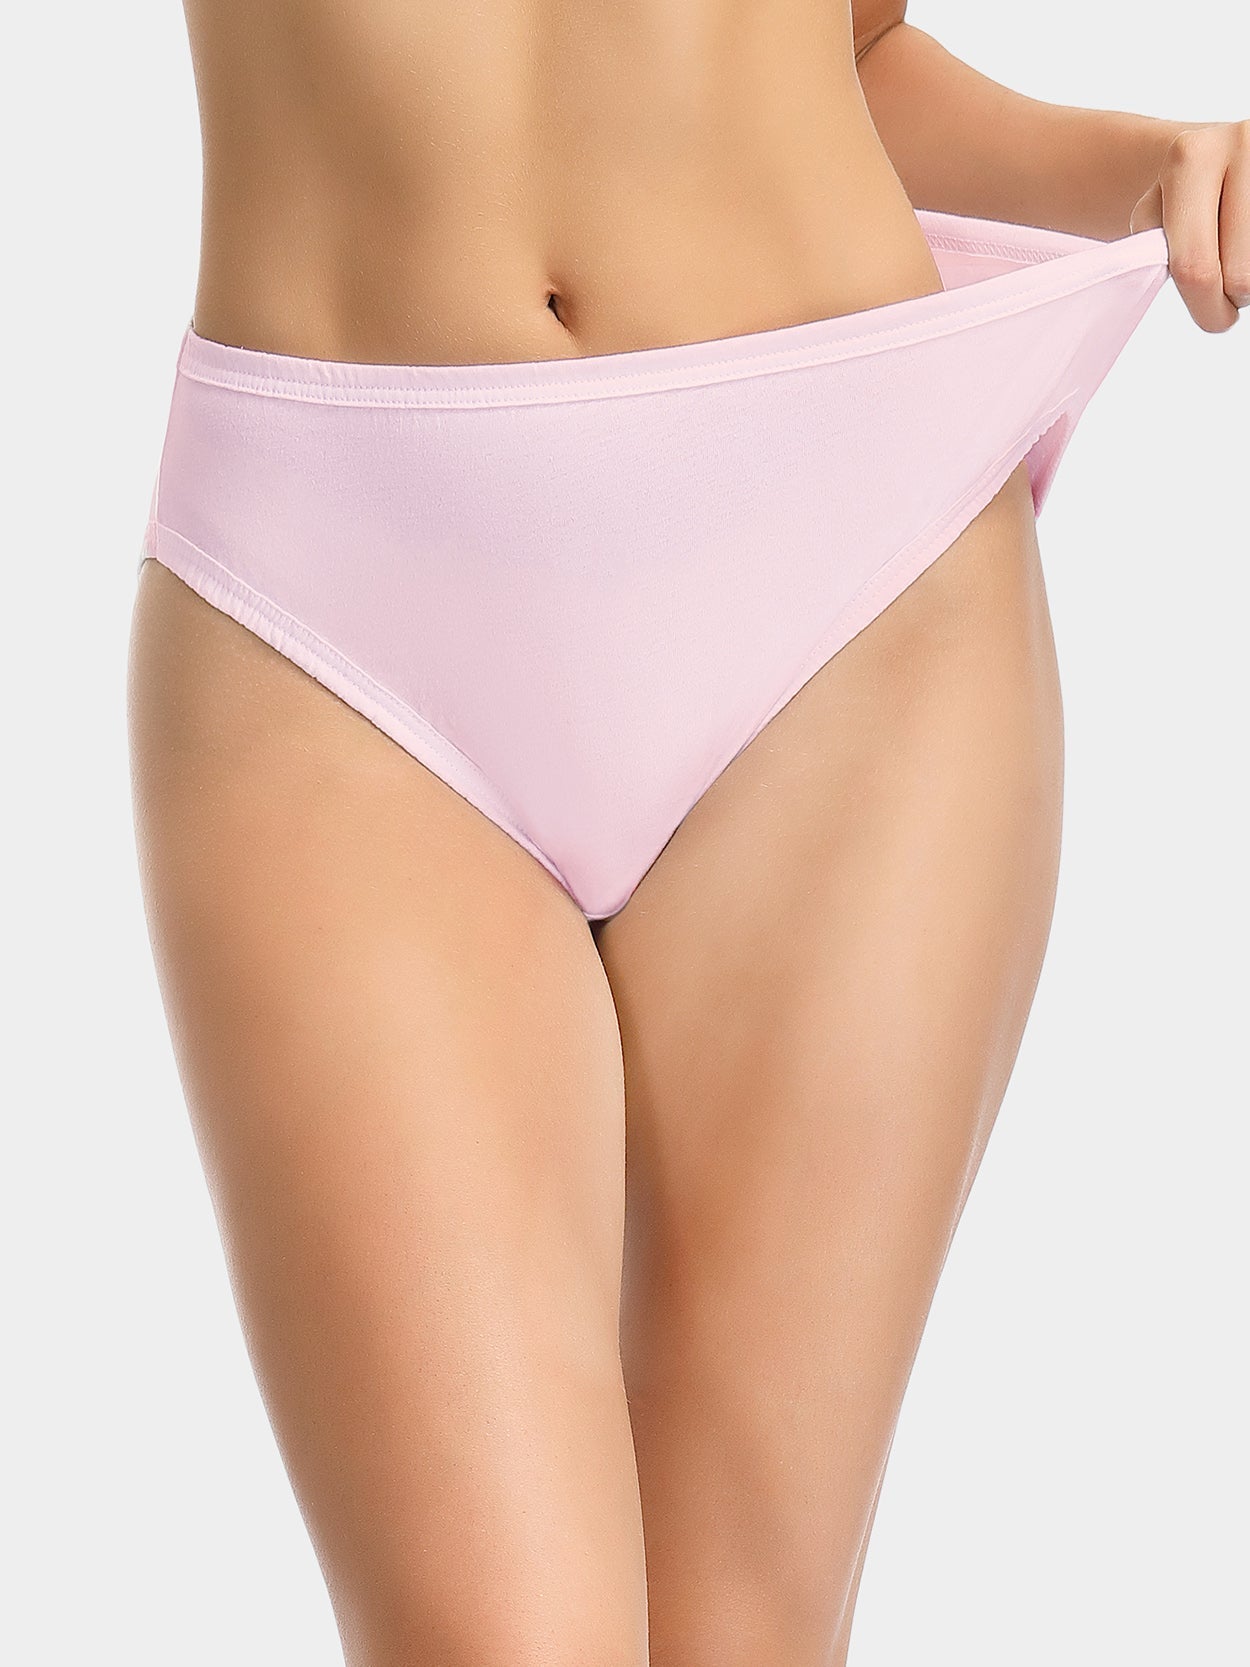 Ketyyh-chn99 Womens Underwear High Cut Panties for Ladies Women's  Comfortable Brief Pink,6XL